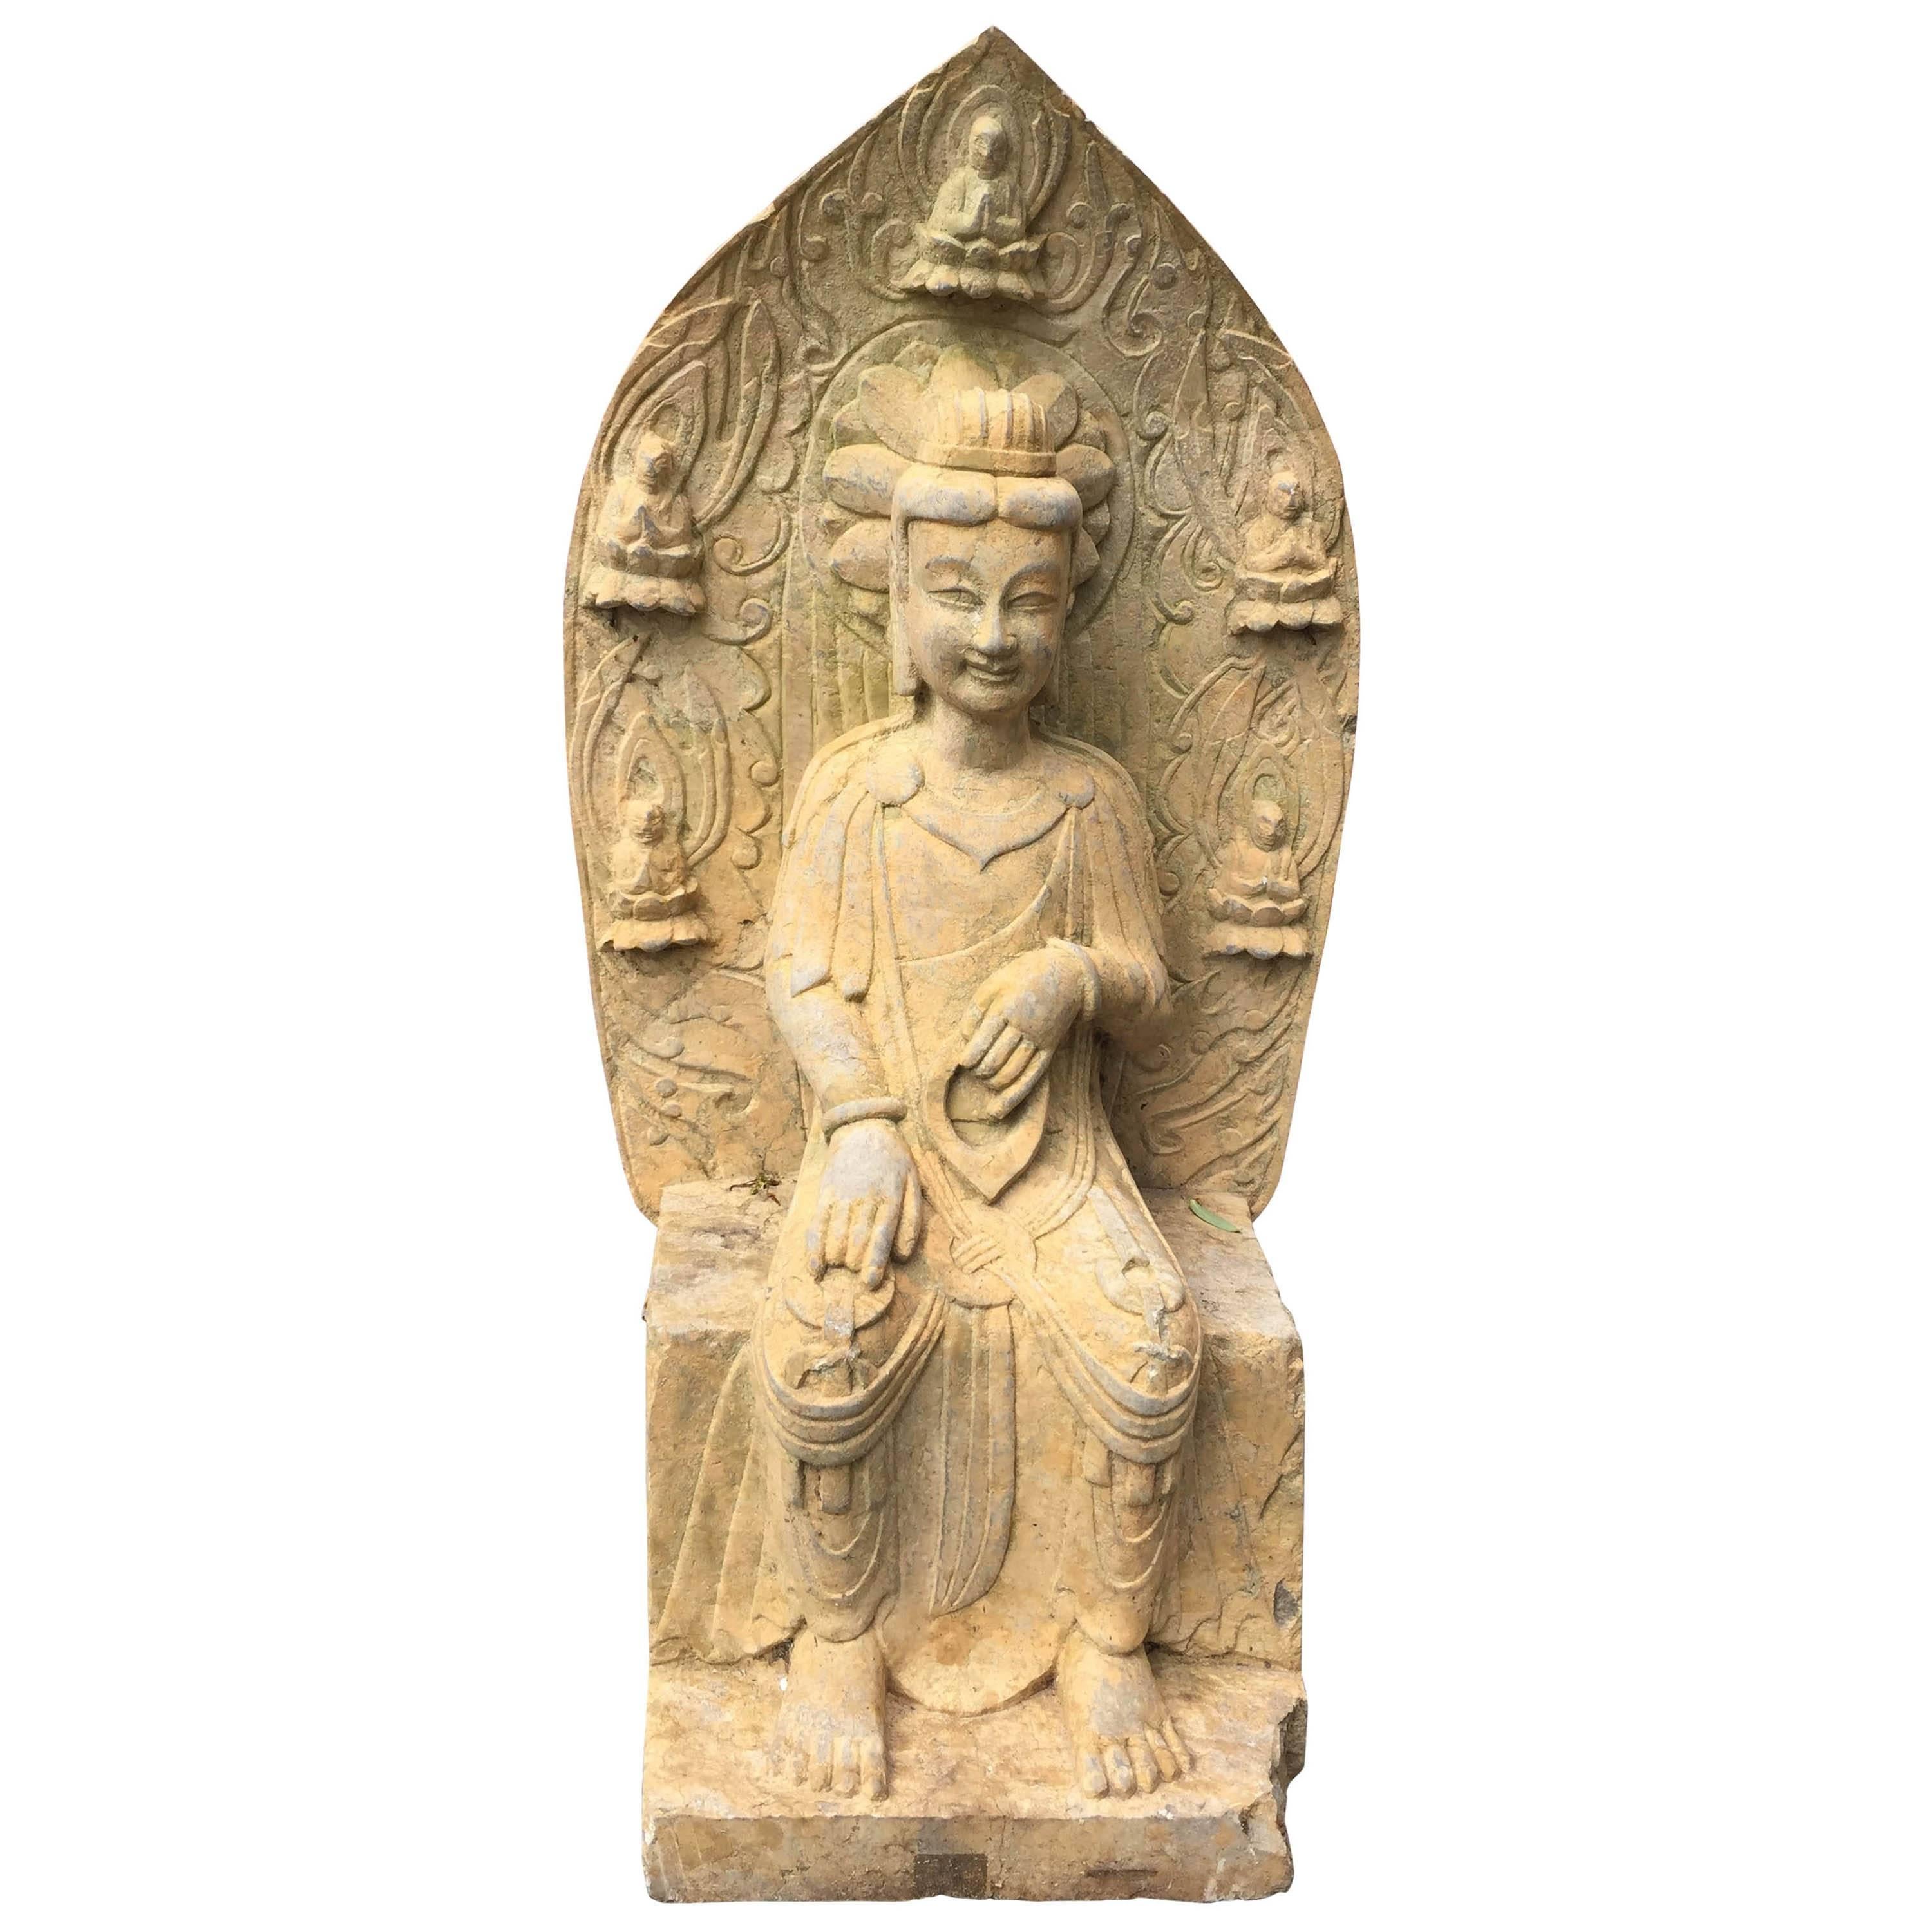 Old Garden Stone Guan Yin Buddha with Lovely Face